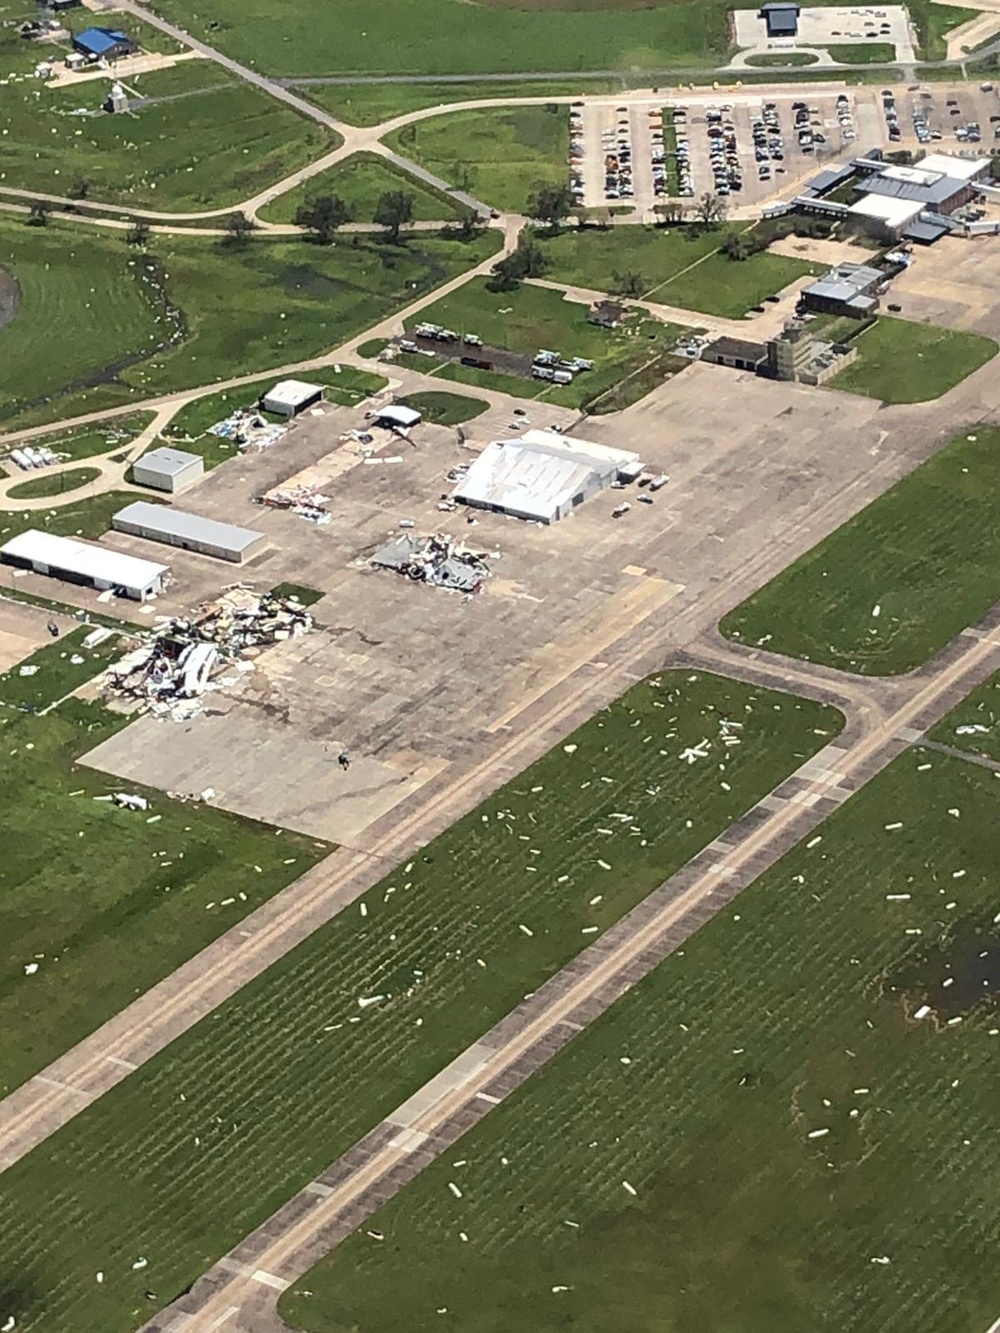 Sector/Air Station Corpus Christi conducts overflight following Hurricane Laura